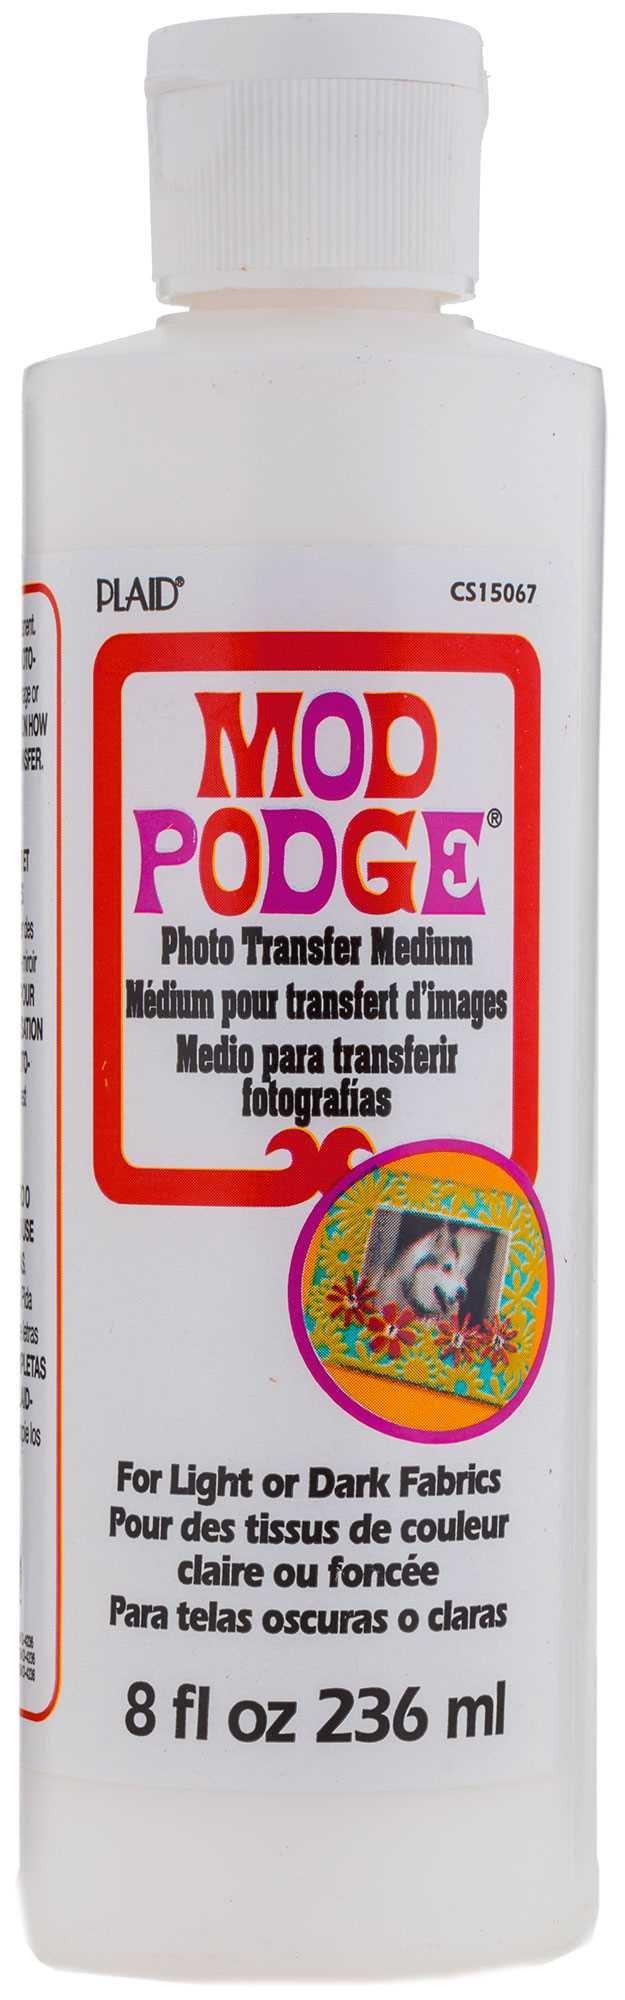 Mod Podge Photo Transfer Medium - 8 fl oz bottle